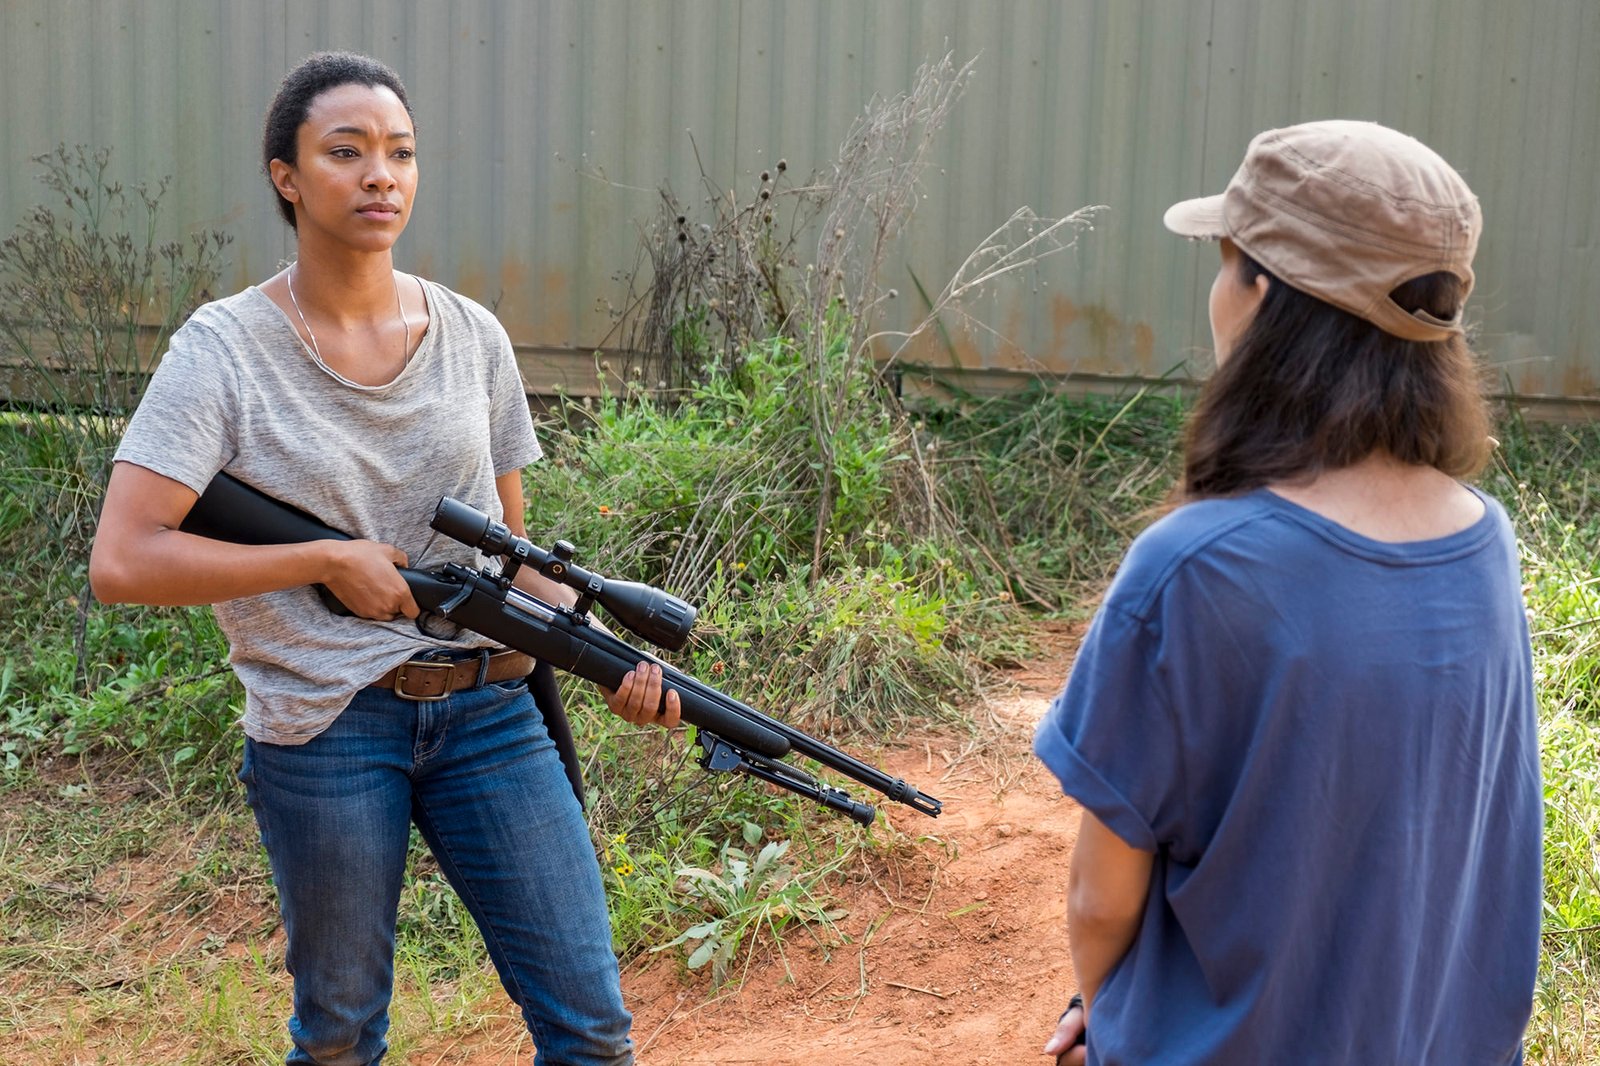 Sonequa Martin-Green as Sasha Williams, Christian Serratos as Rosita EspinosaÂ - The Walking Dead, Season 7, Episode 14